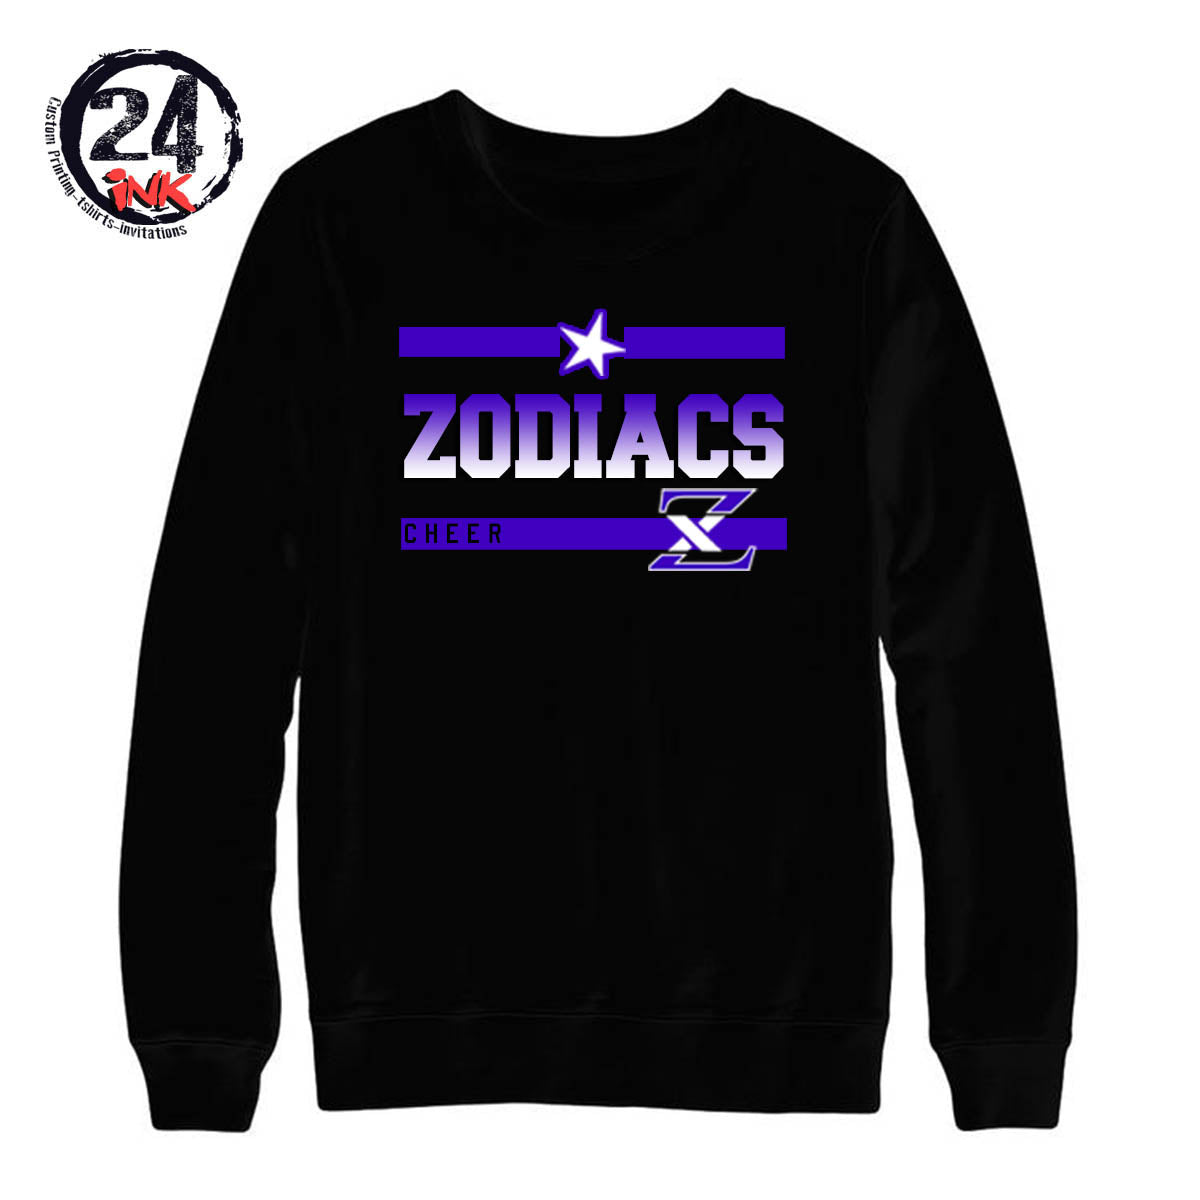 Zodiacs non hooded sweatshirt